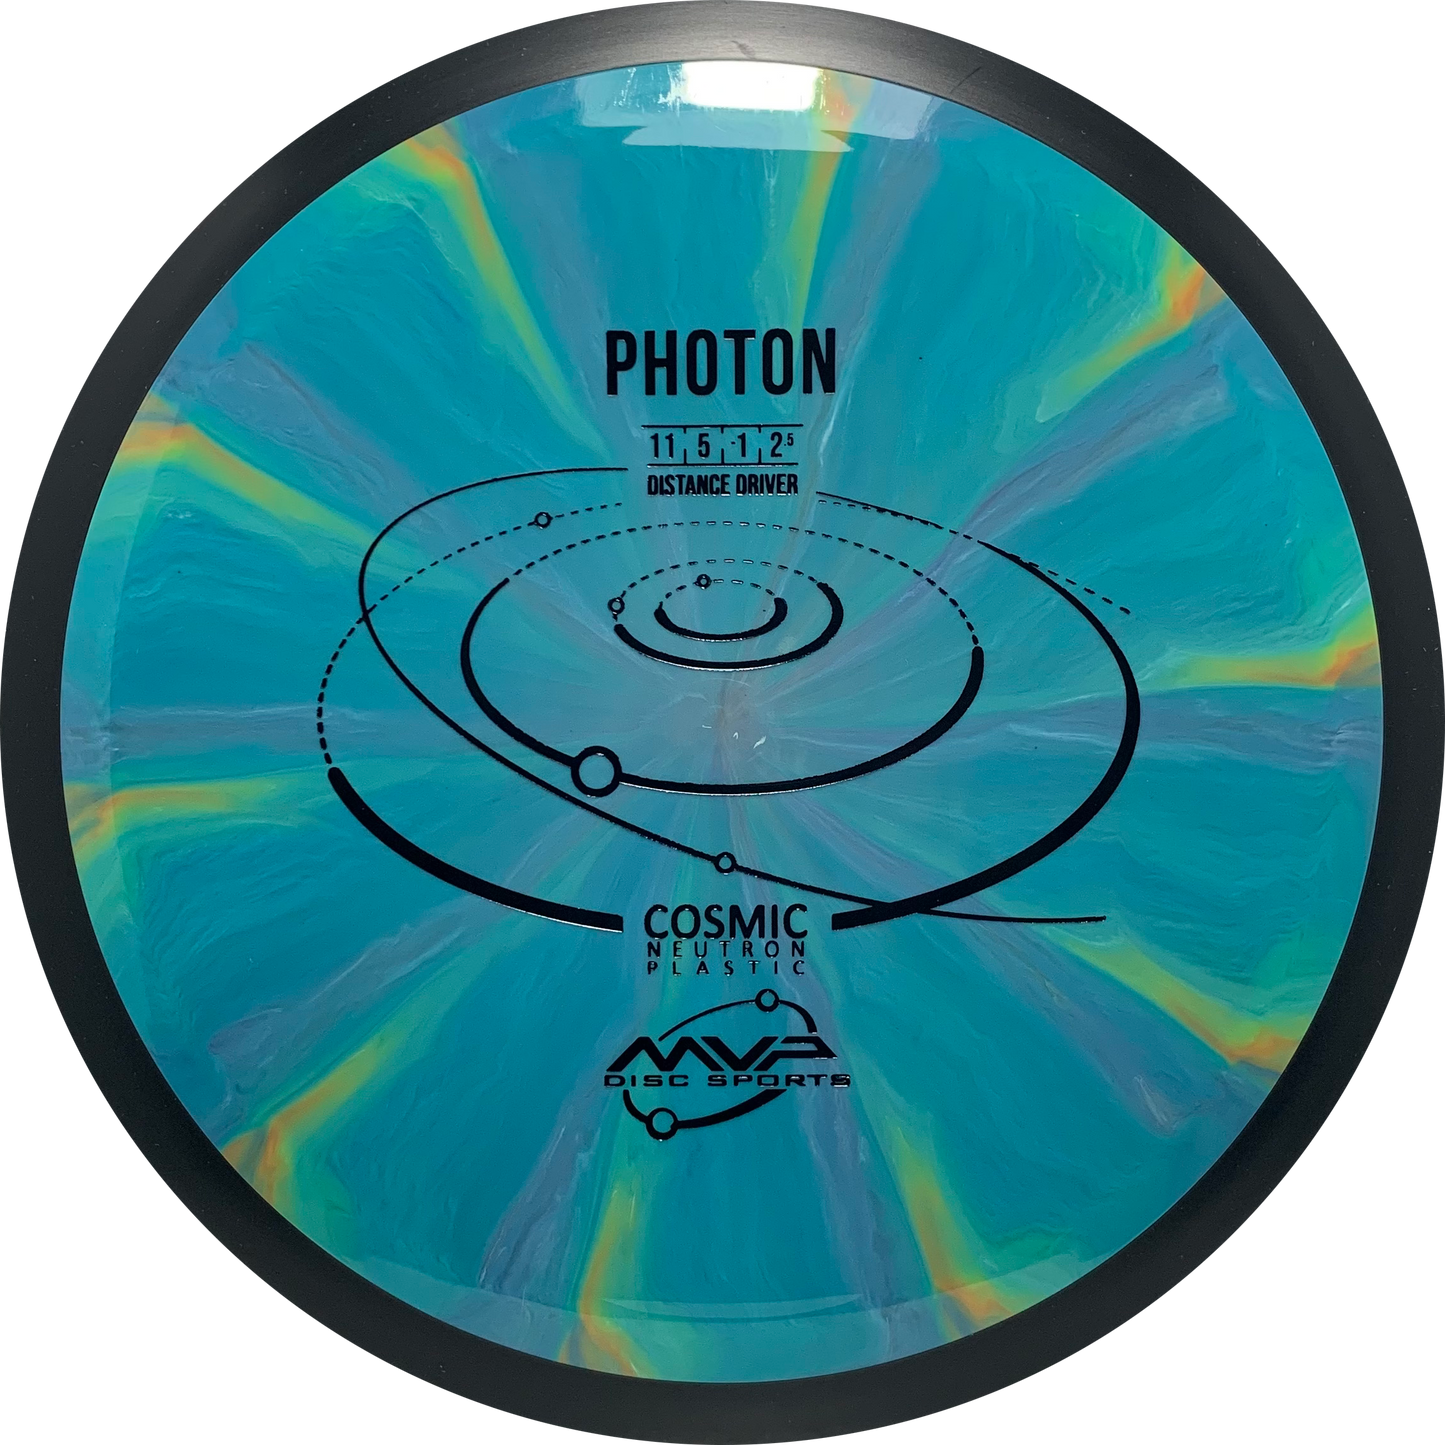 Photon - Cosmic Neutron